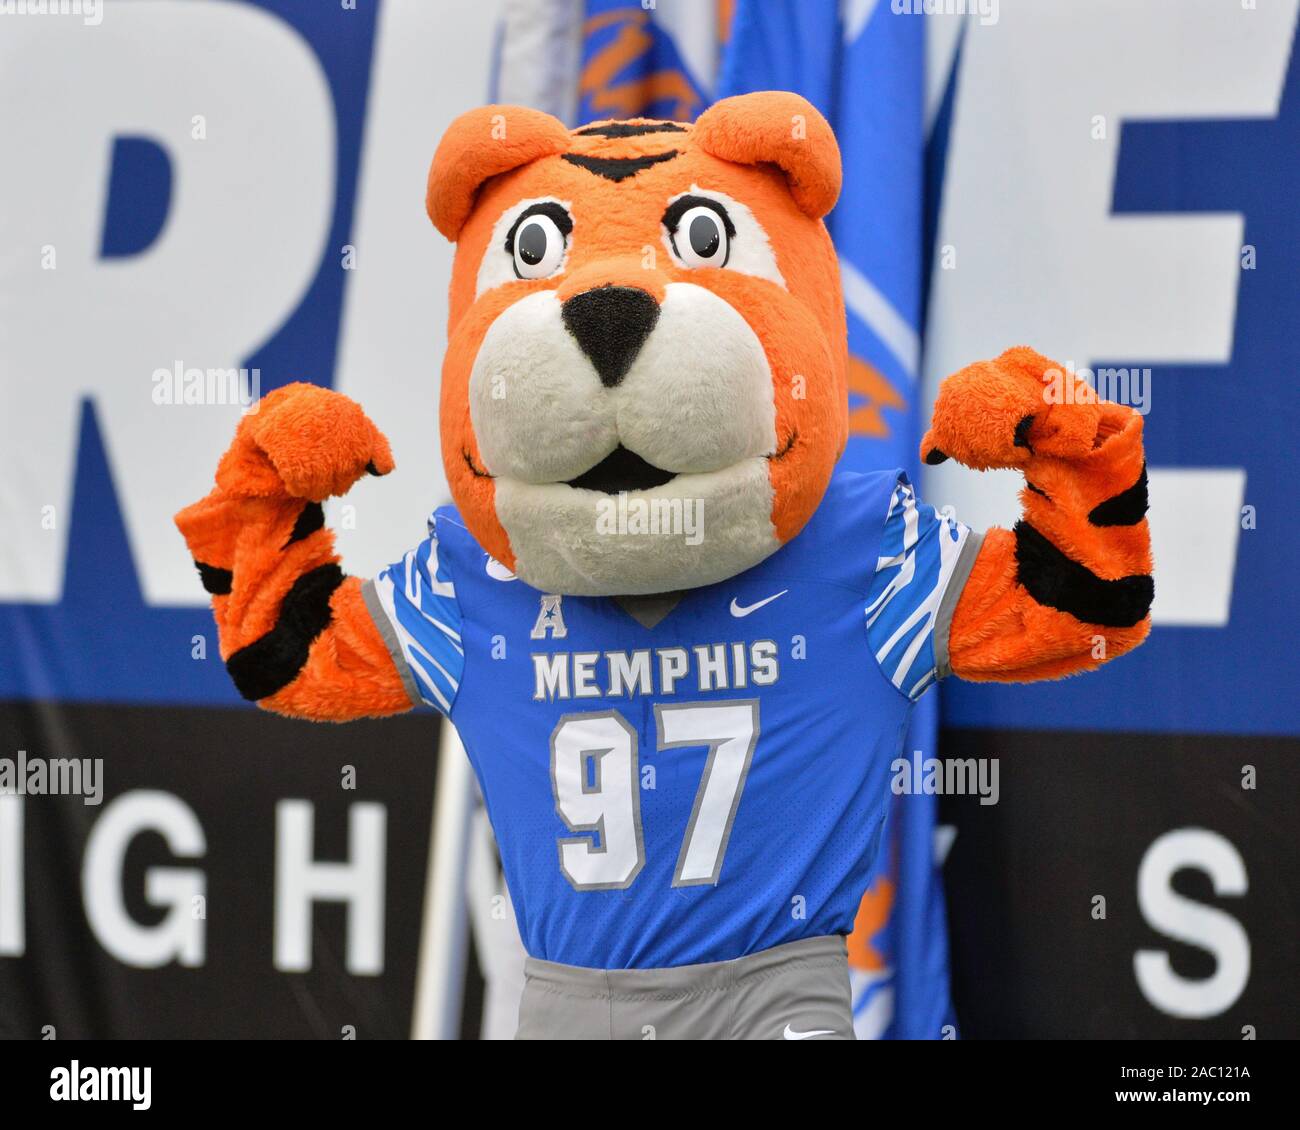 University of Memphis - Mascot, rx93v2